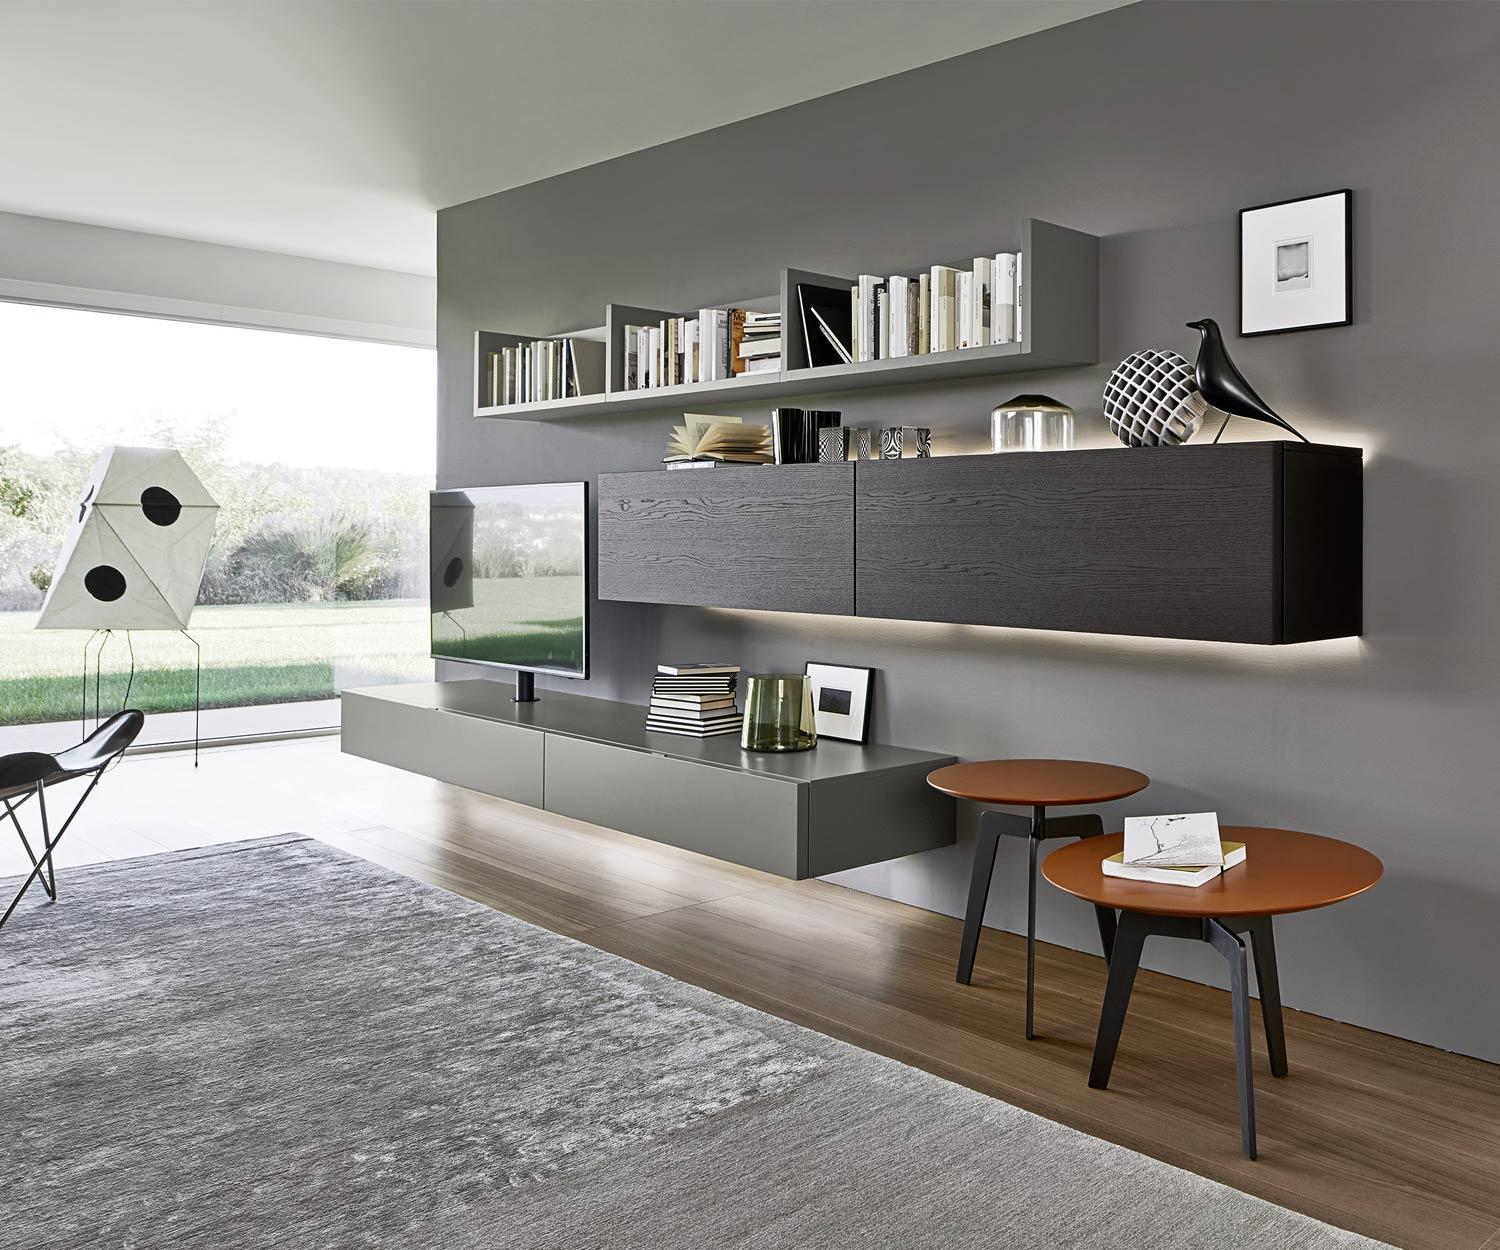 Exclusive Livitalia Design wall unit C60 Design lowboard with TV mount